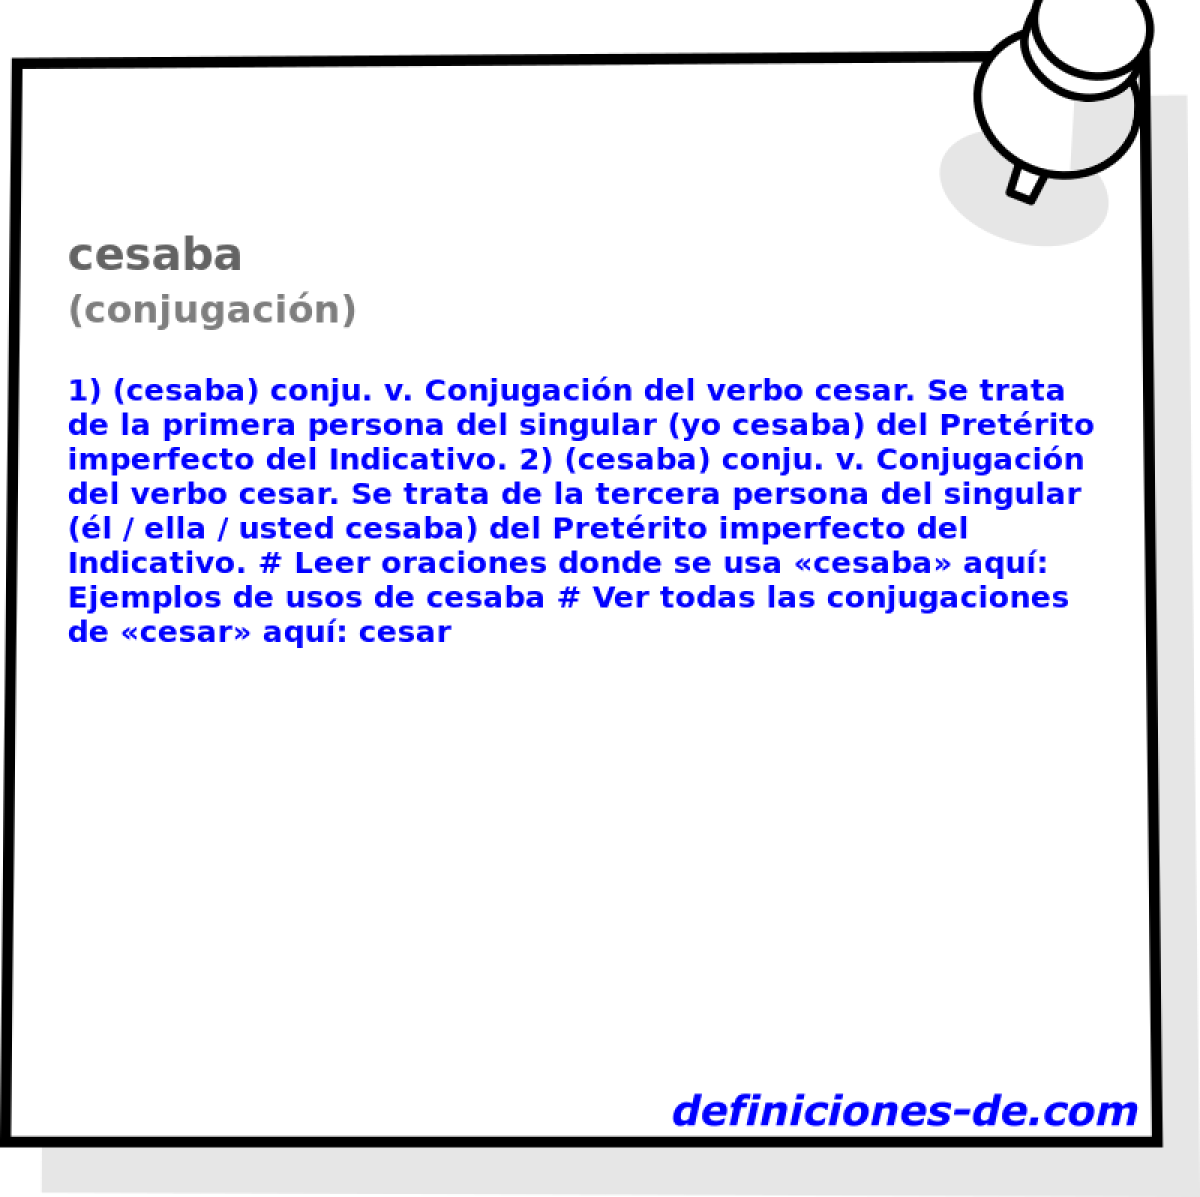 cesaba (conjugacin)